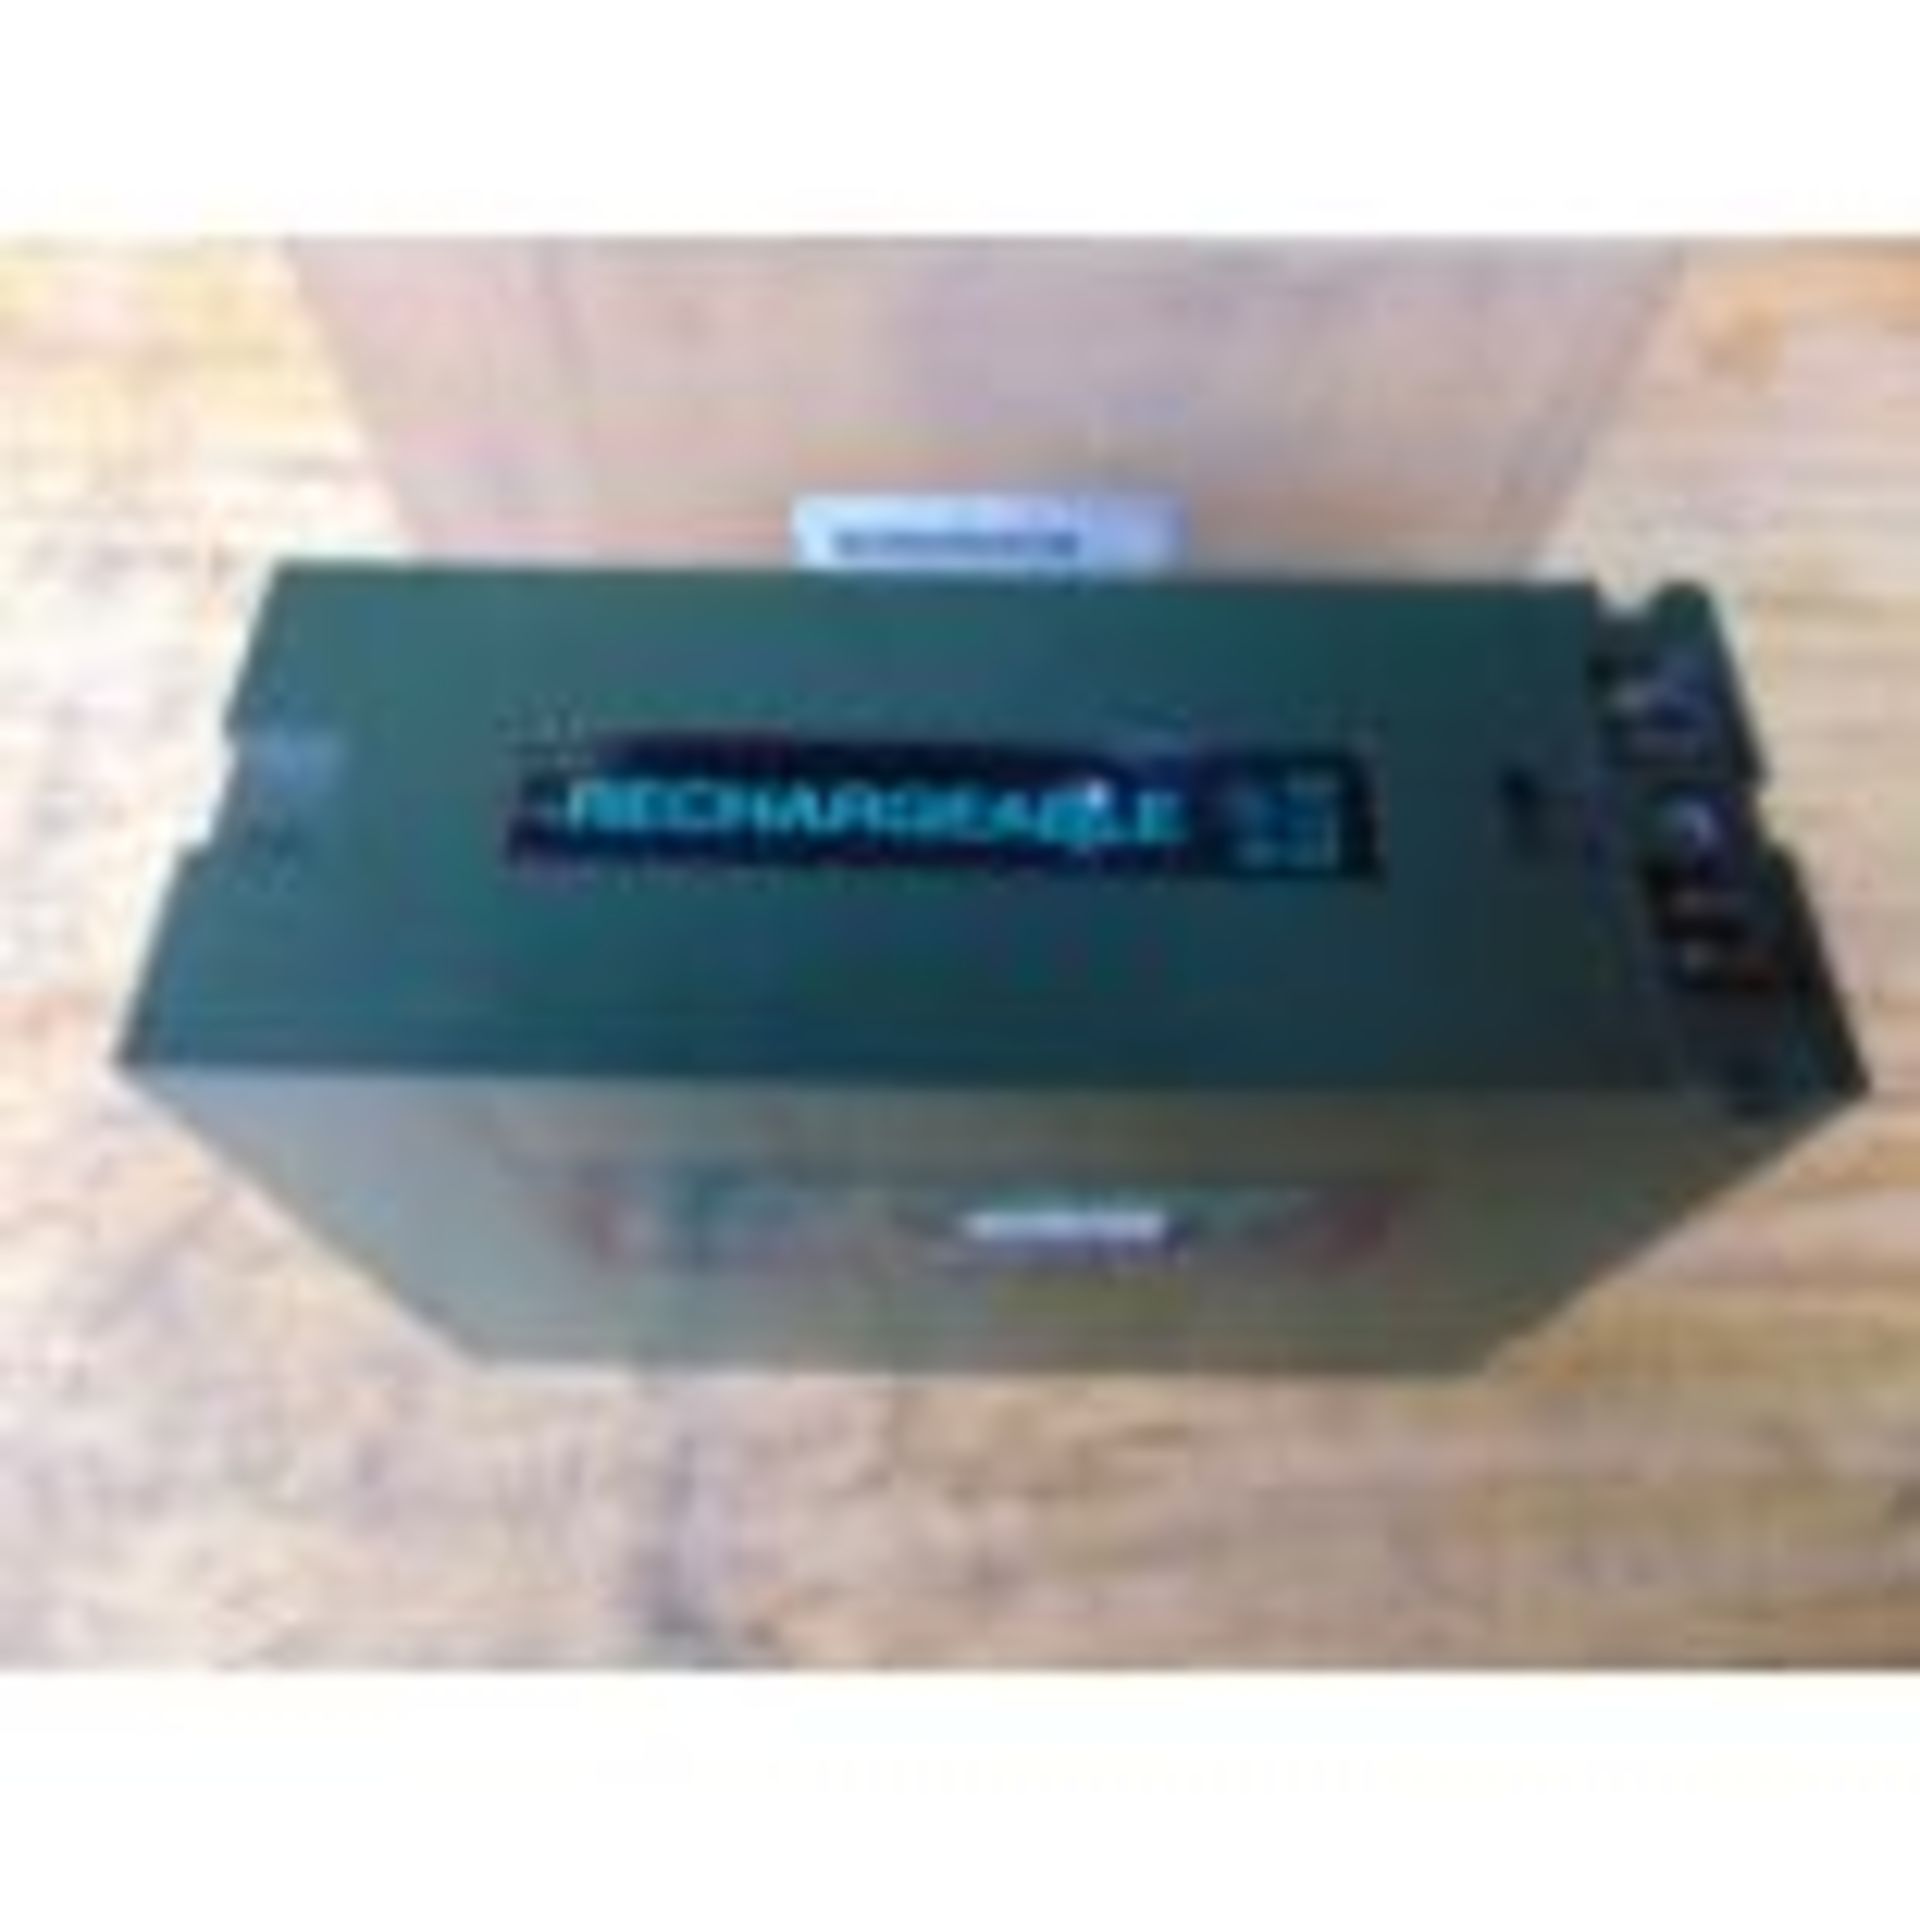 2 x New Unissued Clansman 24 Volt 5AH Rechargeable Batteries - Image 4 of 4